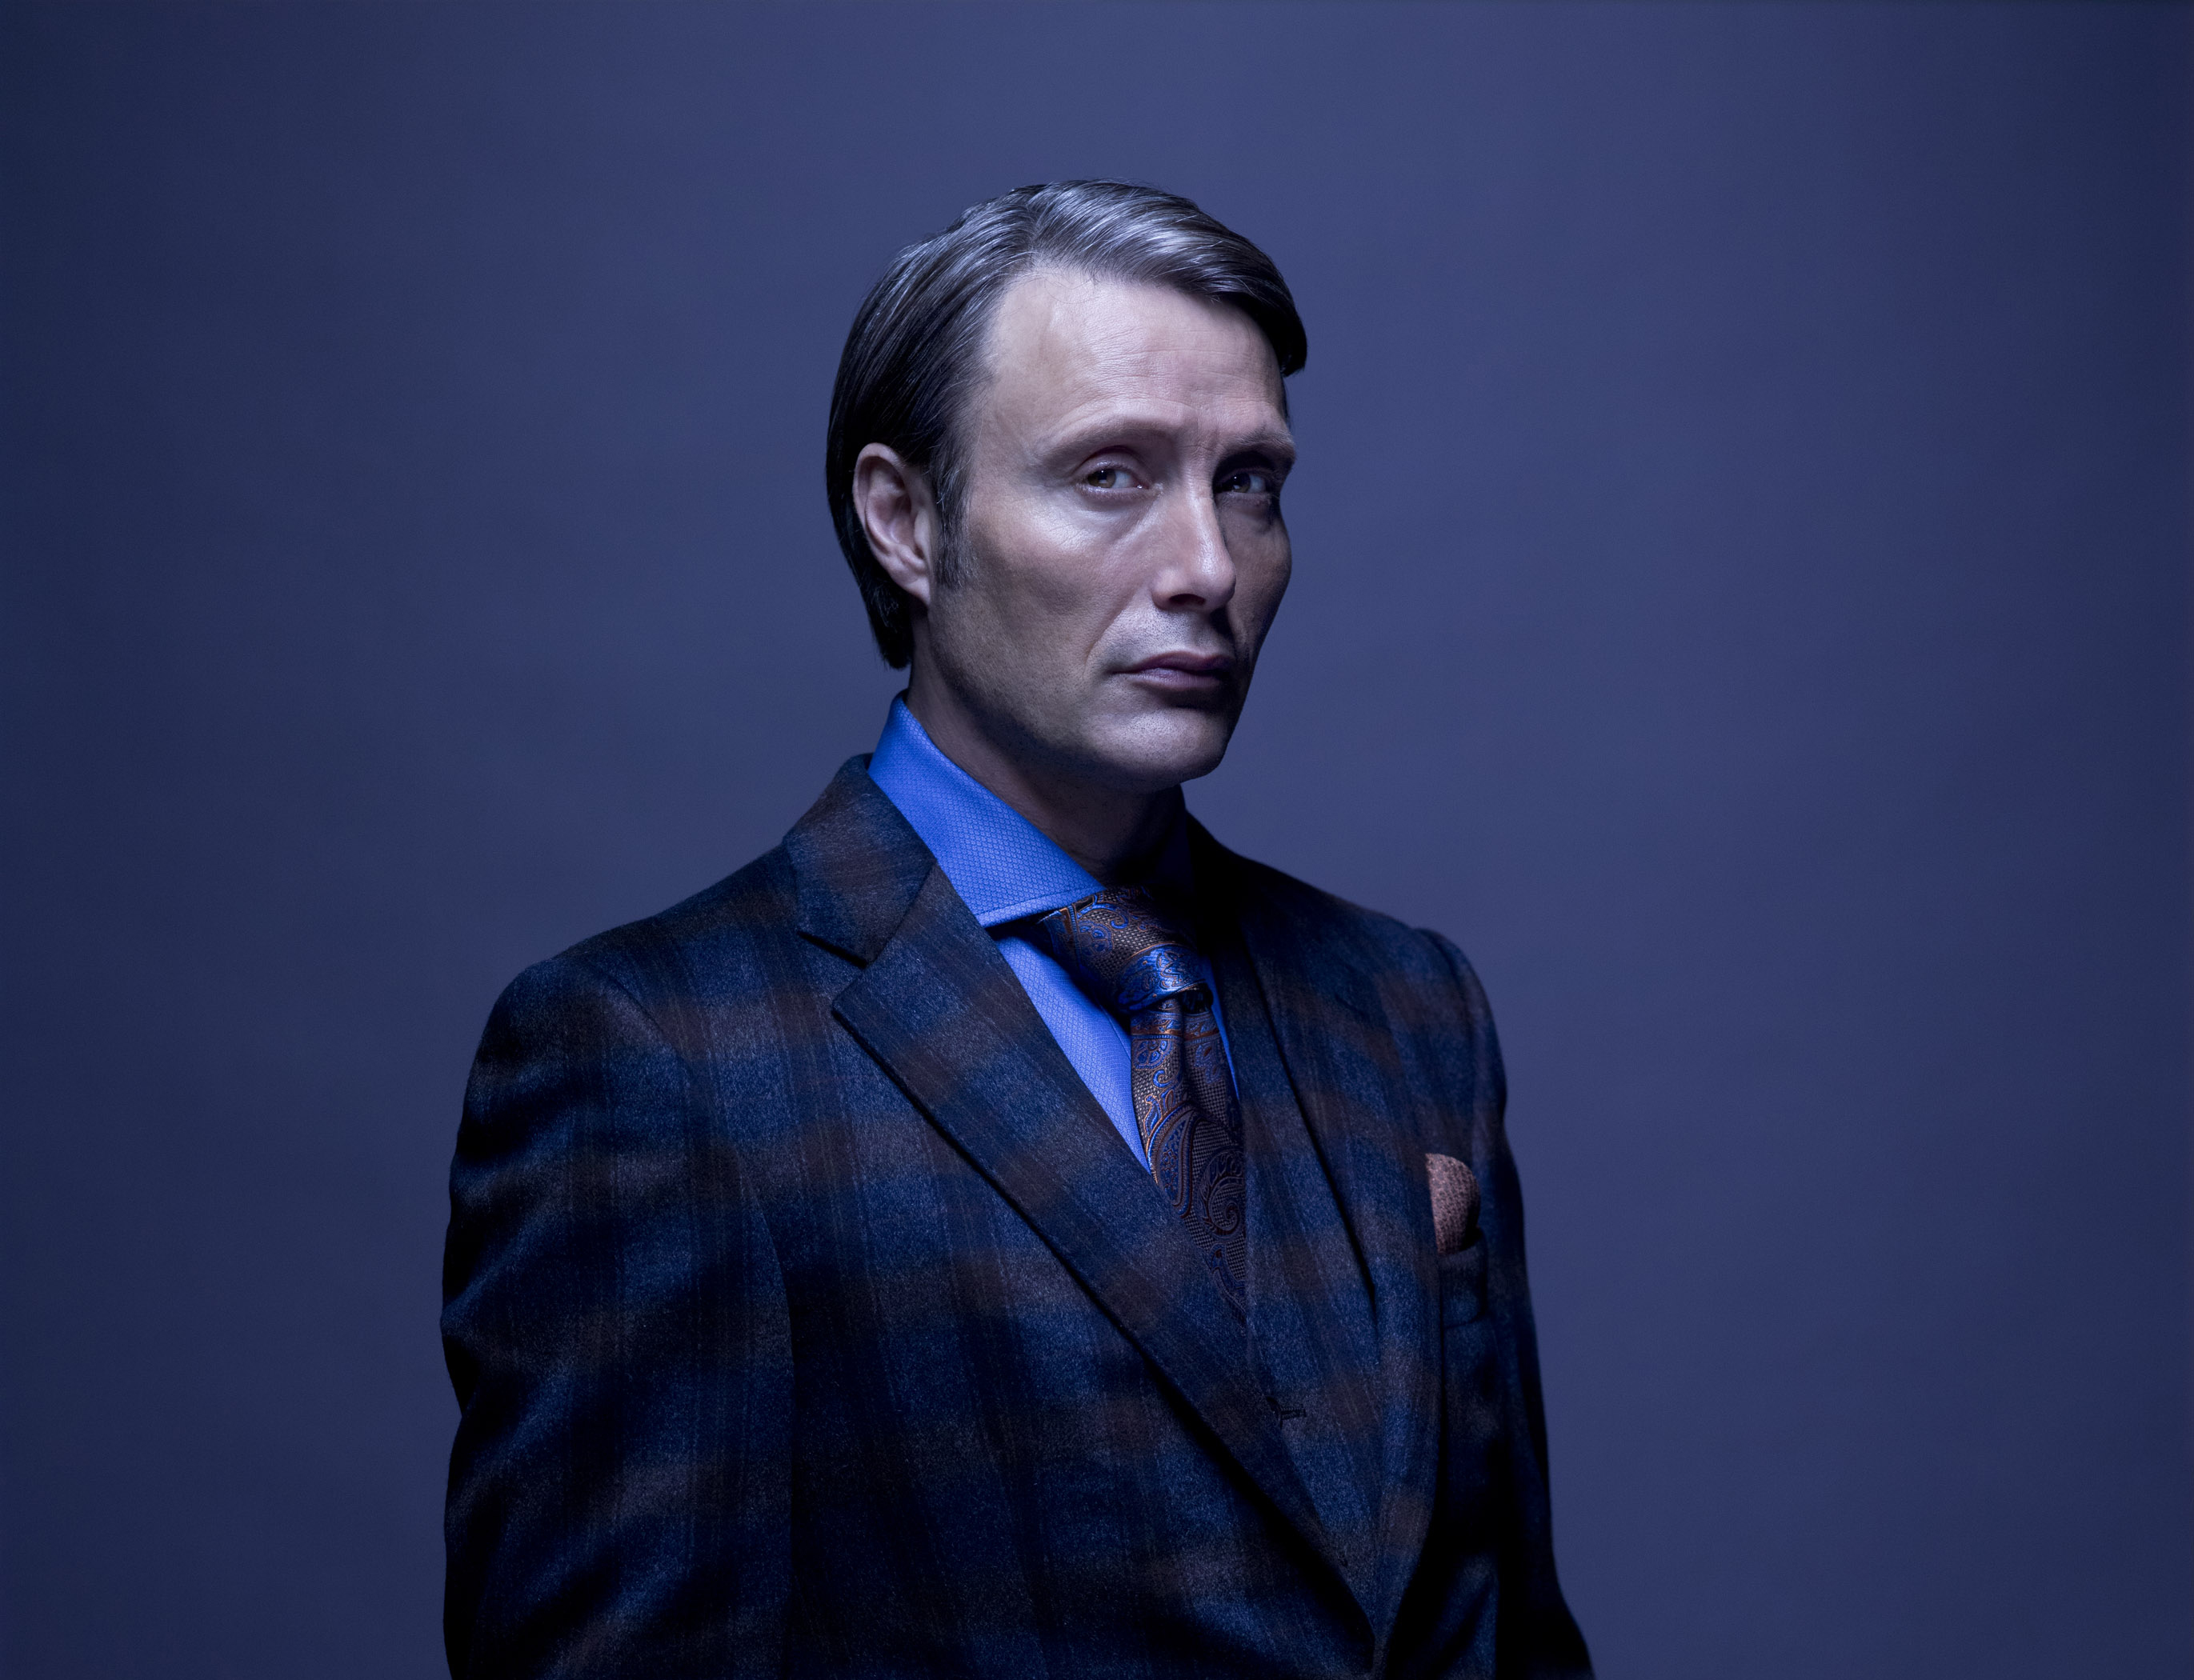 Mads Mikkelsen as Dr. Hannibal Lecter - Hannibal TV Series Photo ...